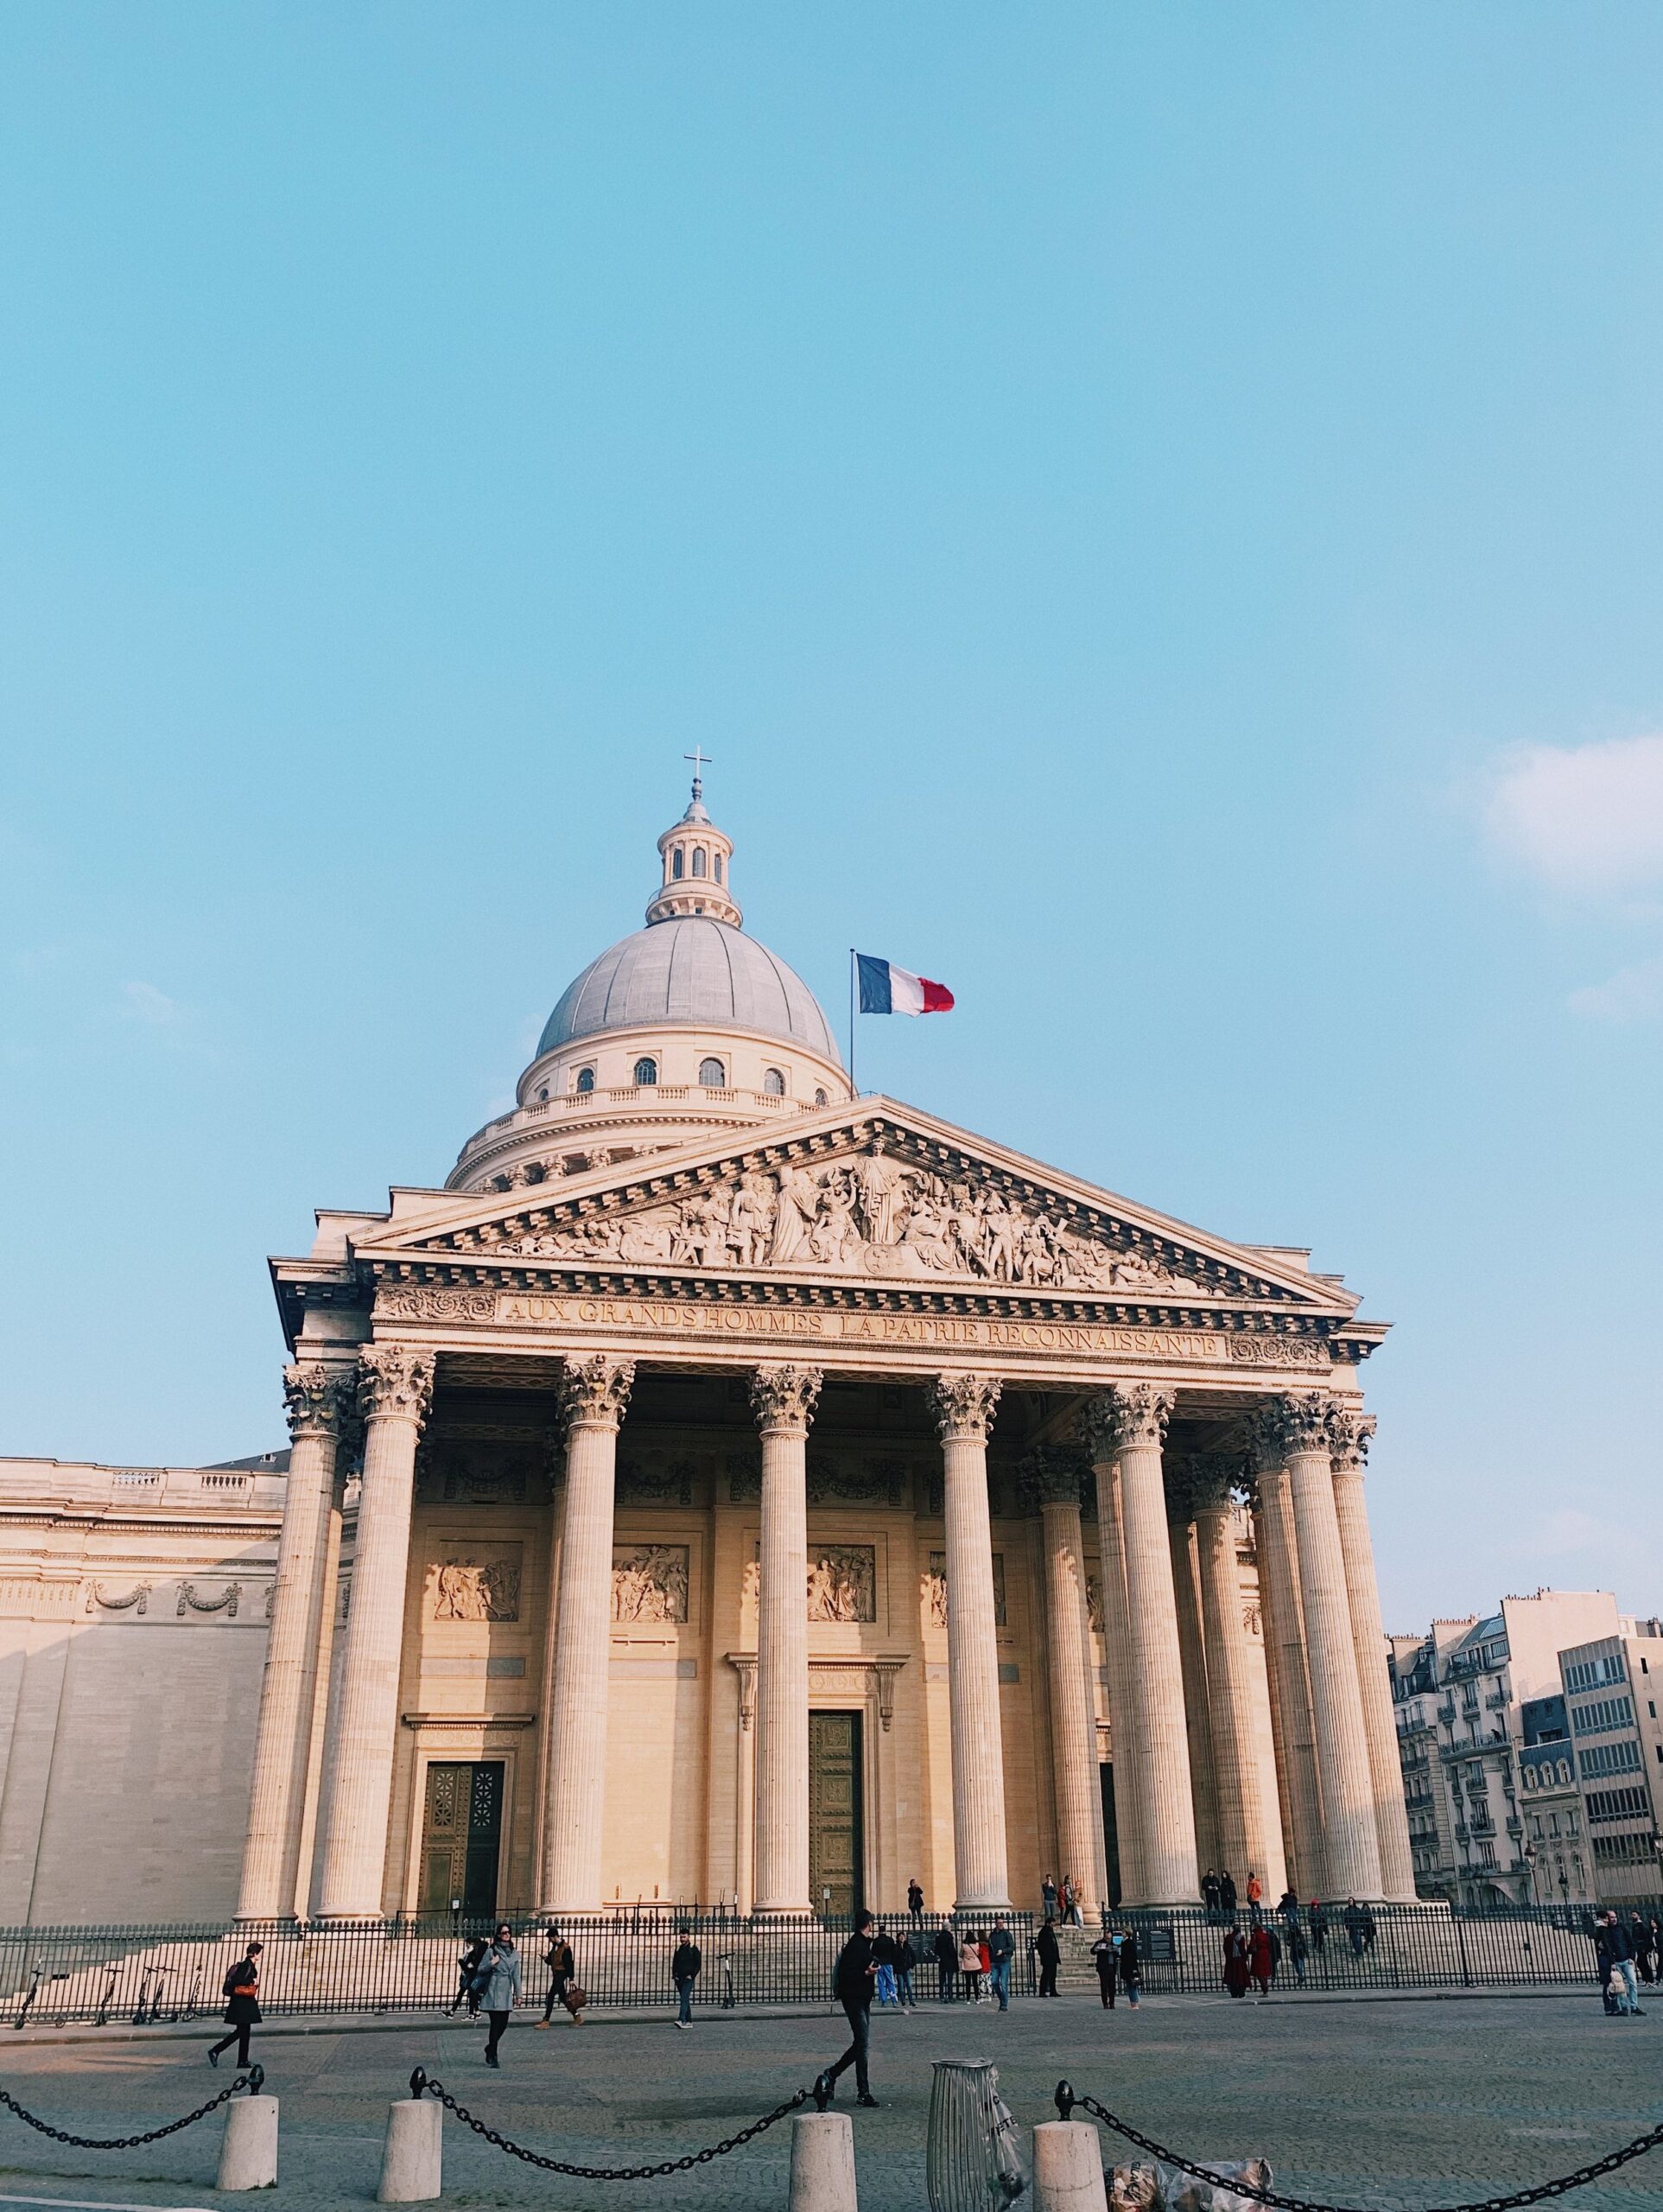 Paris’ Pantheon.